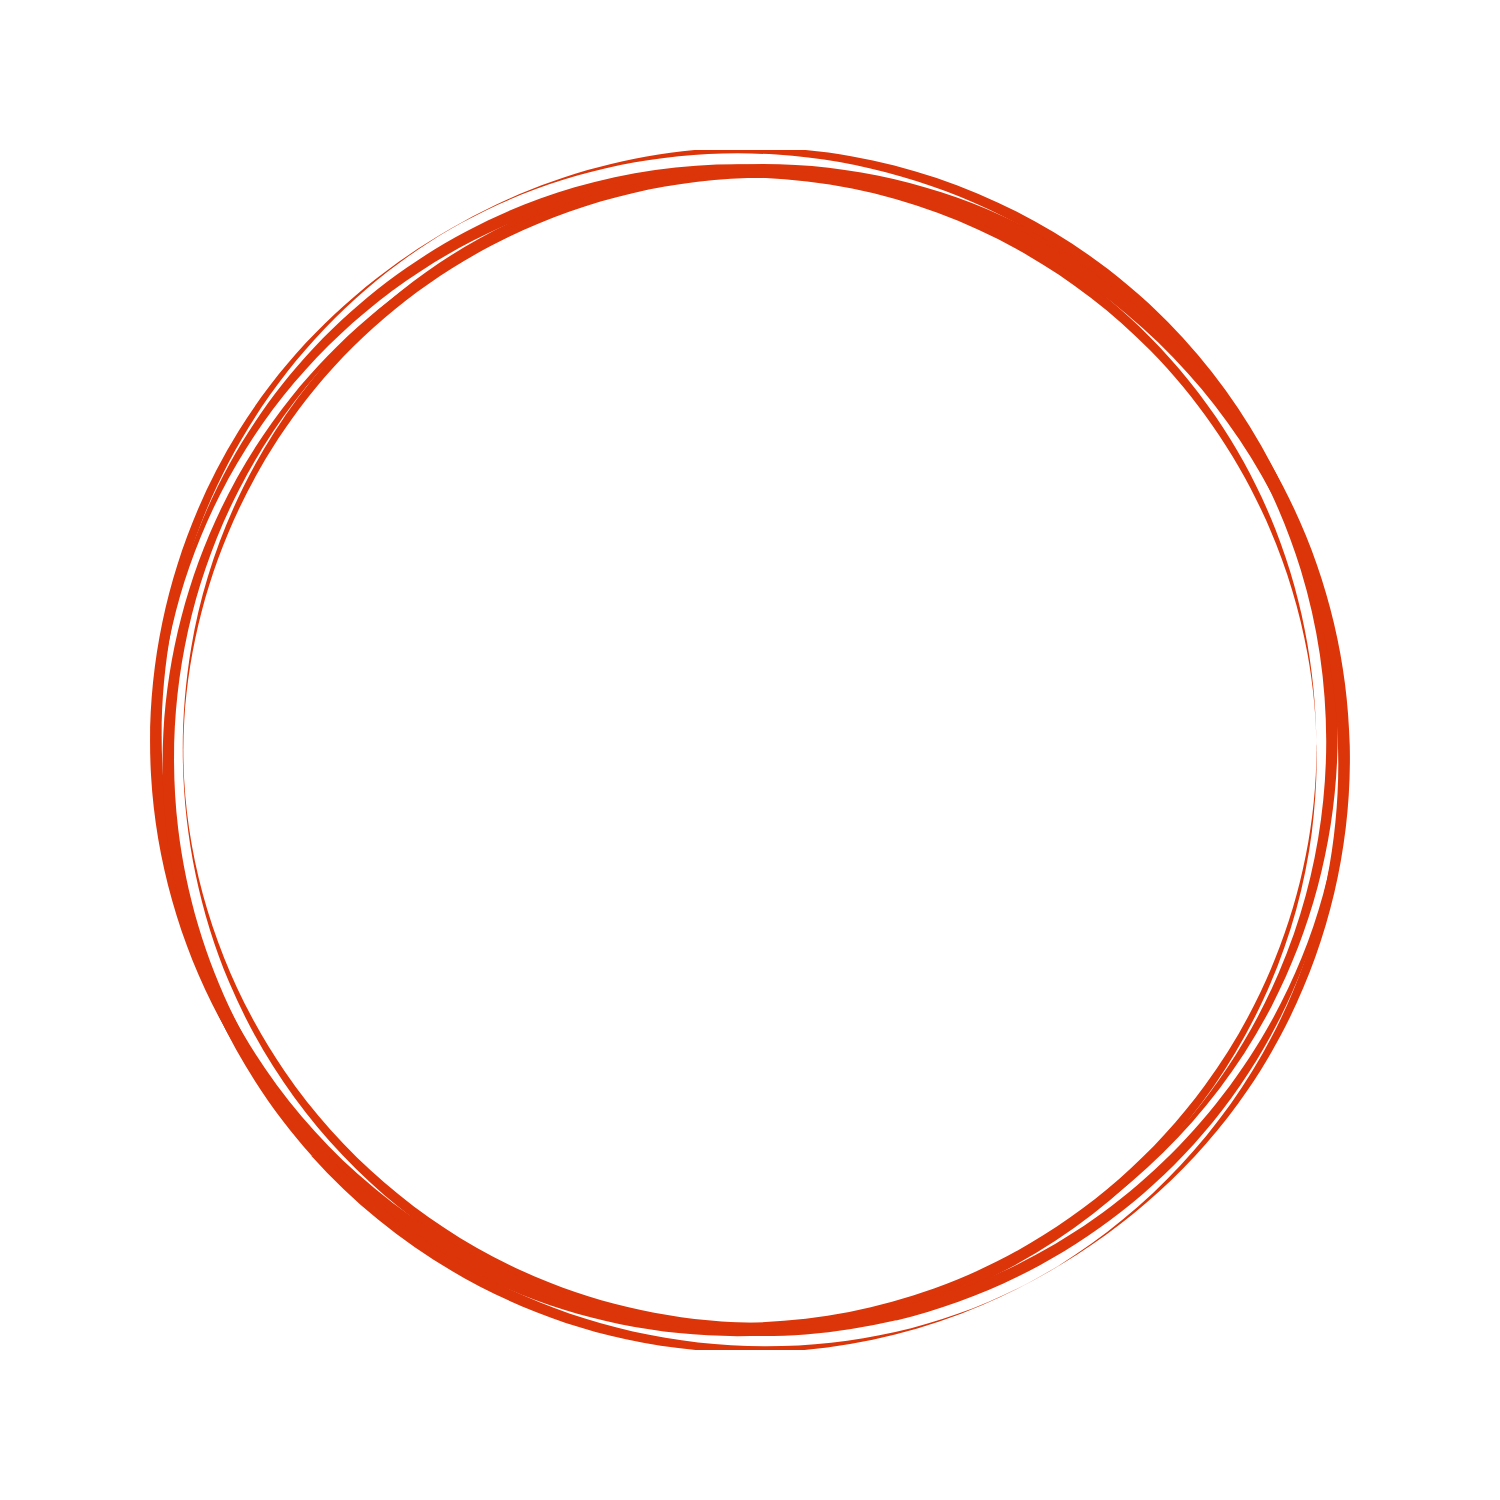 Sarah Klein Masterson